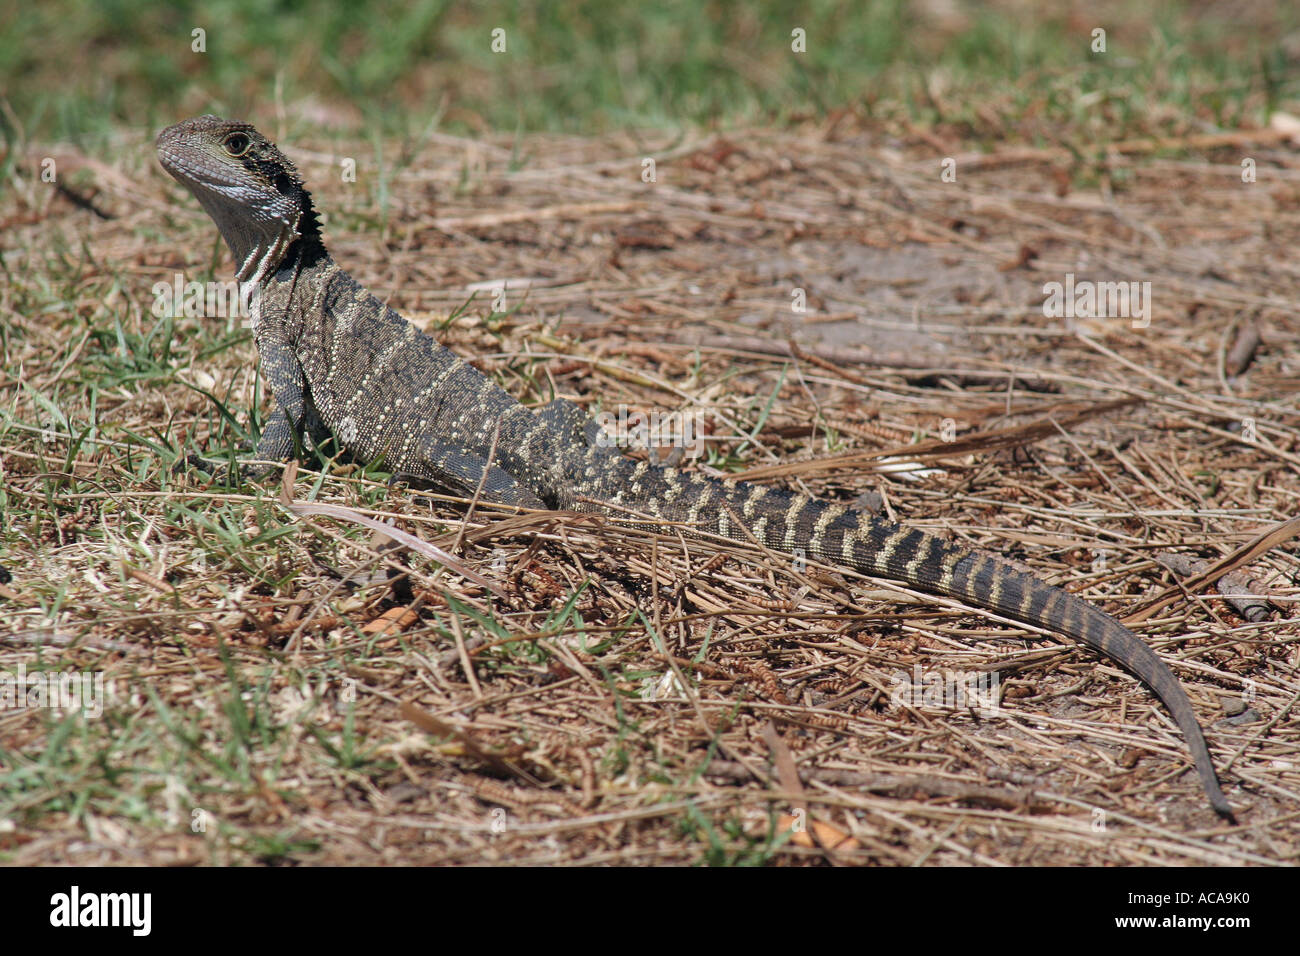 Australian lizard in bush scene Stock Photo